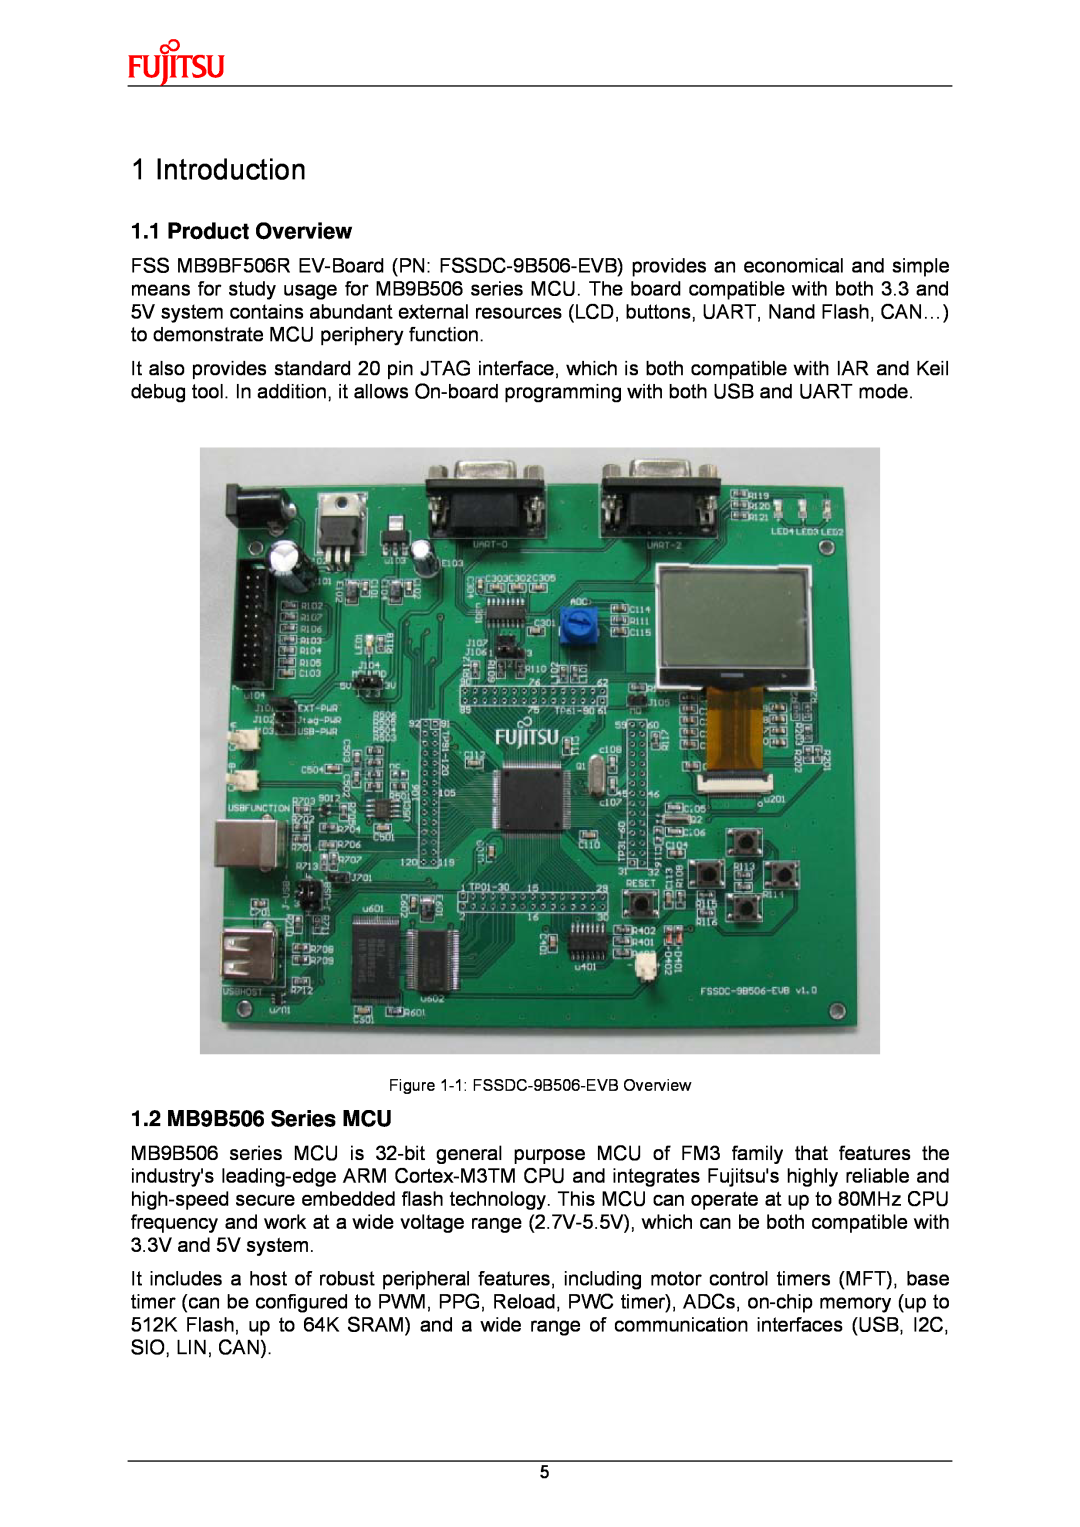 Fujitsu MB9B500 Series user manual Introduction, Product Overview, 1.2 MB9B506 Series MCU 